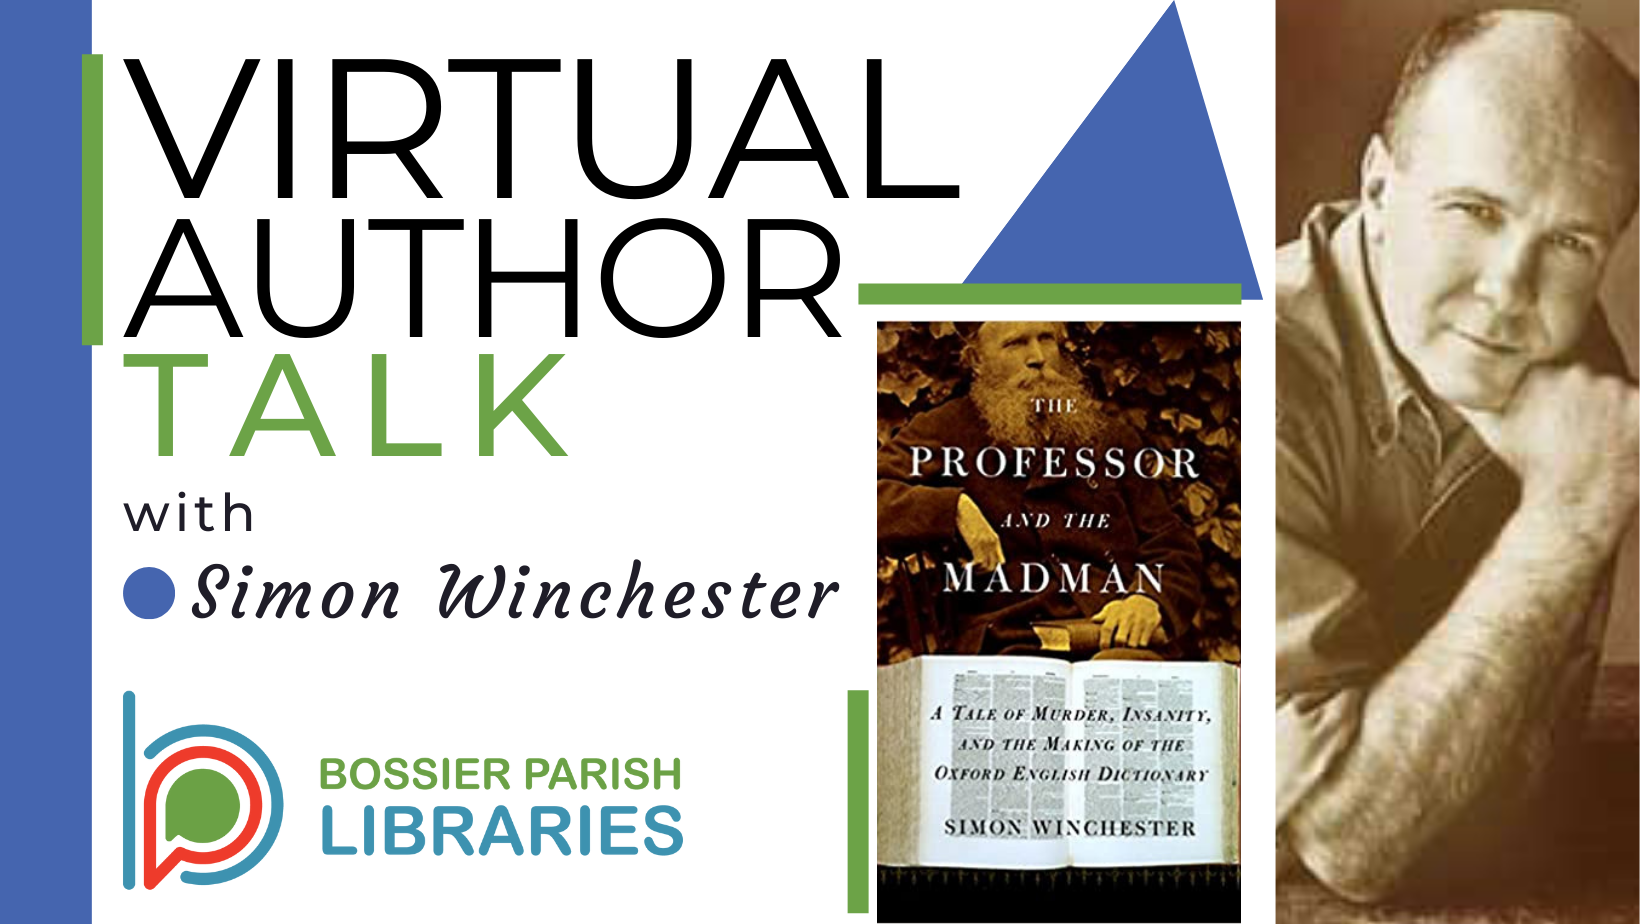 Virtual Author Talk with Simon Winchester